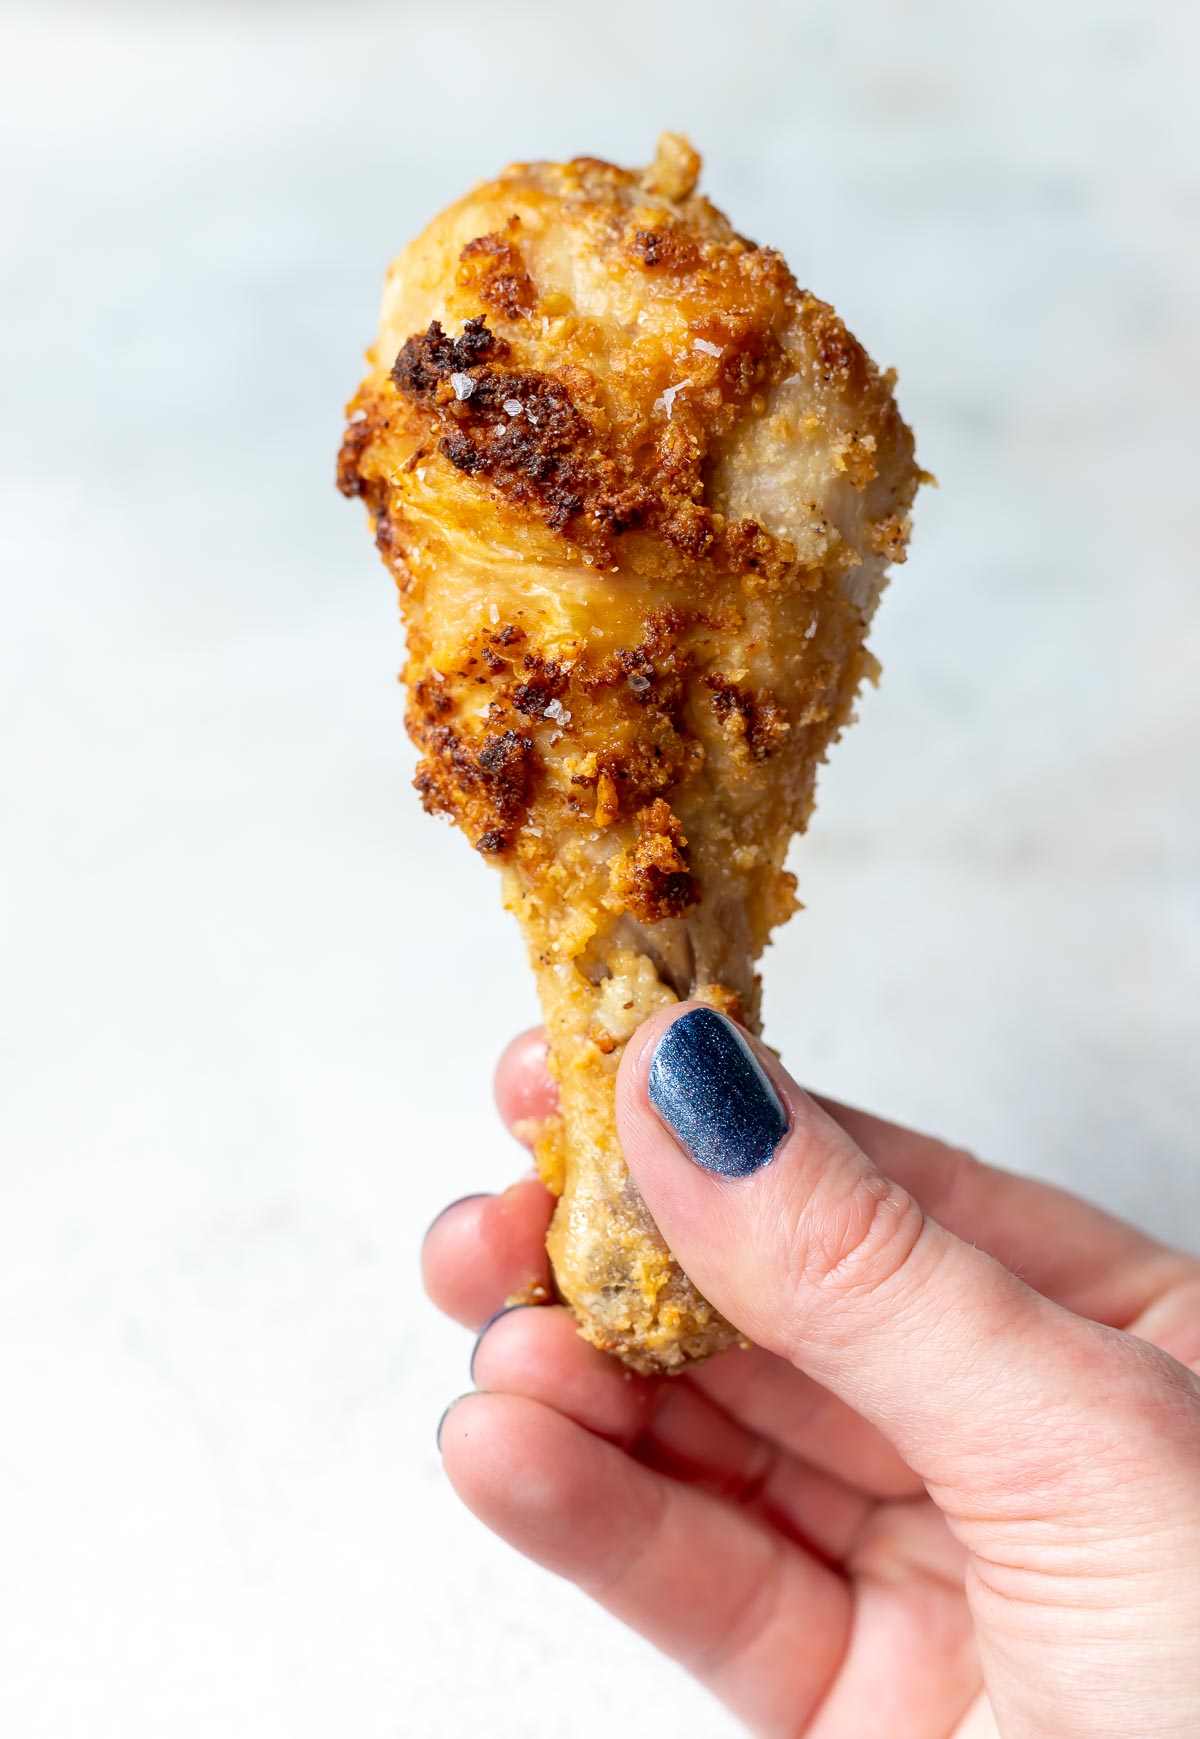 Air Fryer Chicken Drumsticks Keto Tasty Air Fryer Recipes,Flies In House Plants